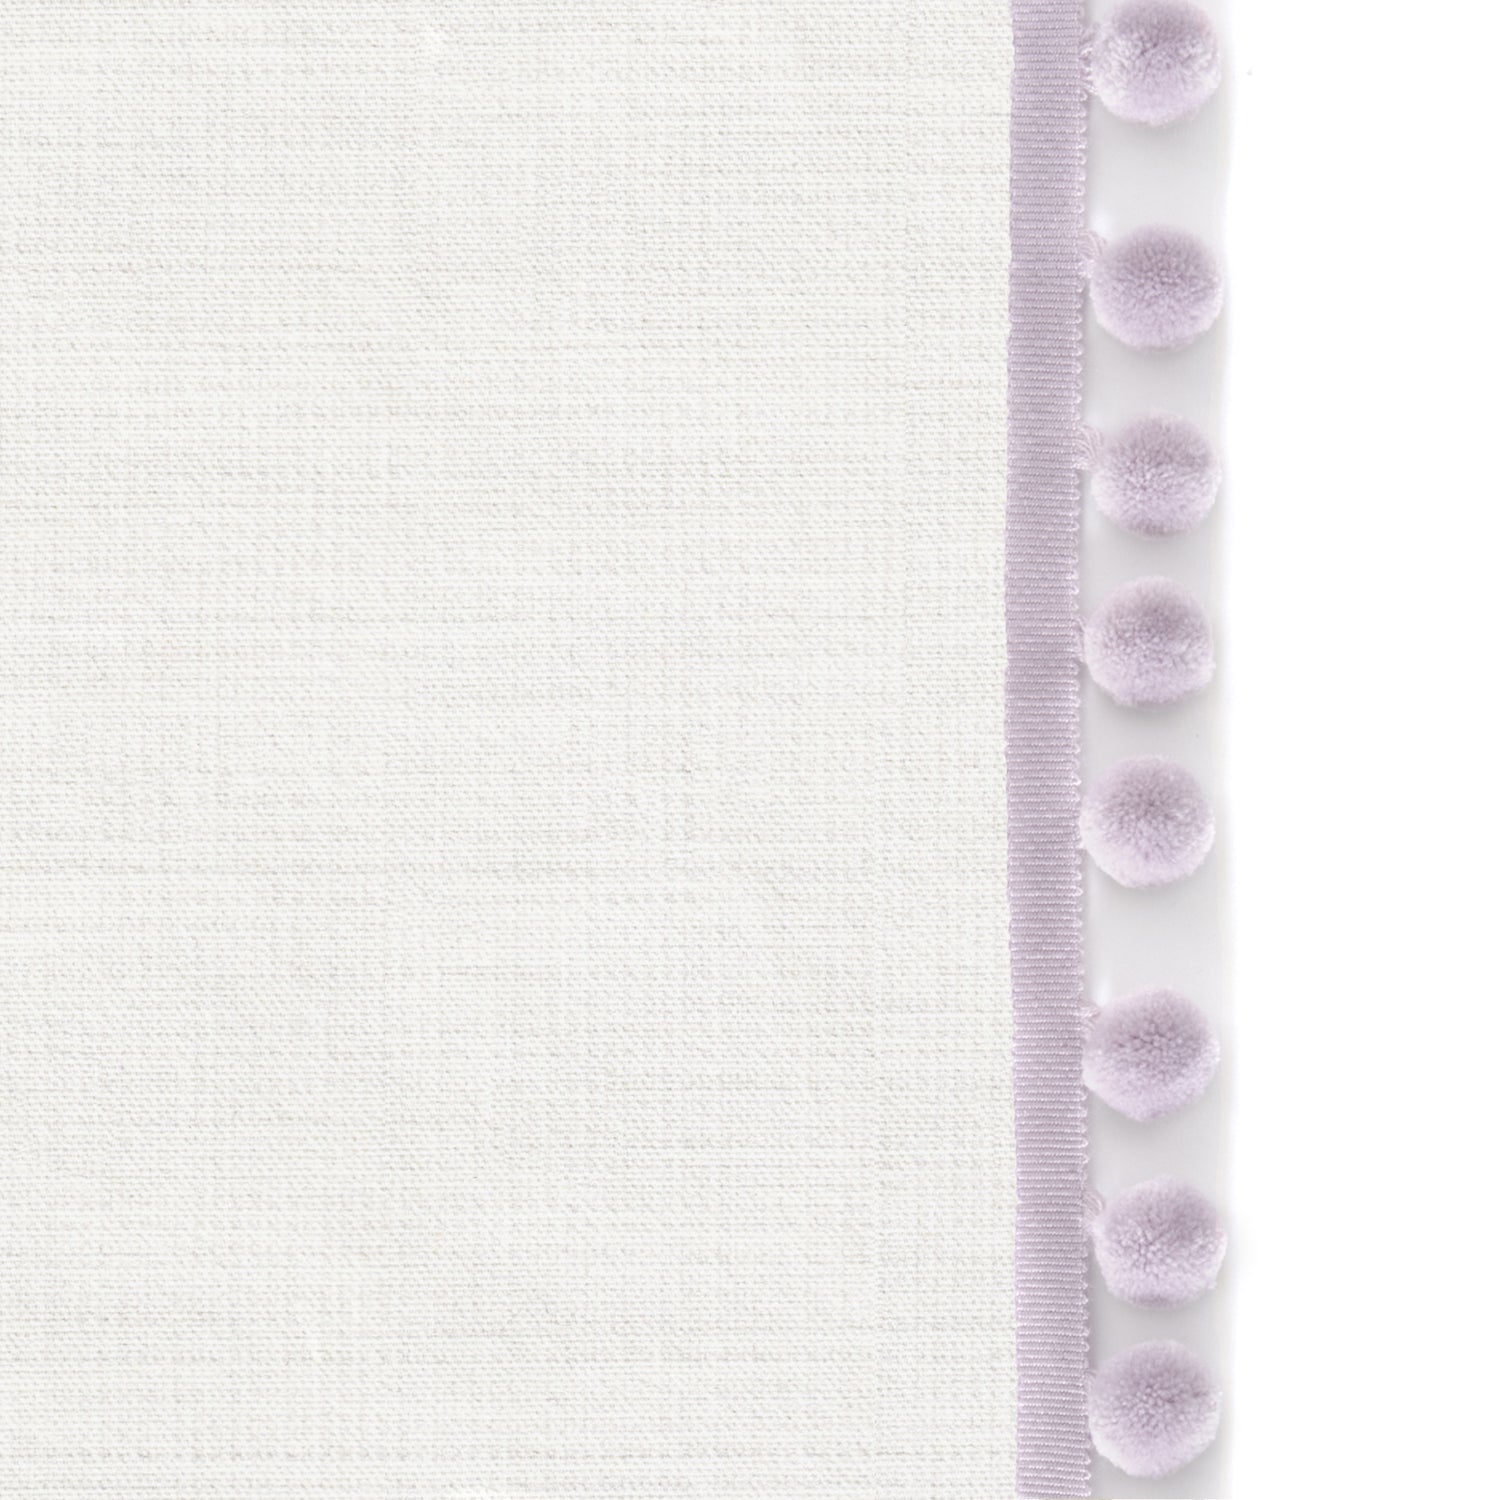 Upclose picture of Snow custom curtain with lilac pom pom trim